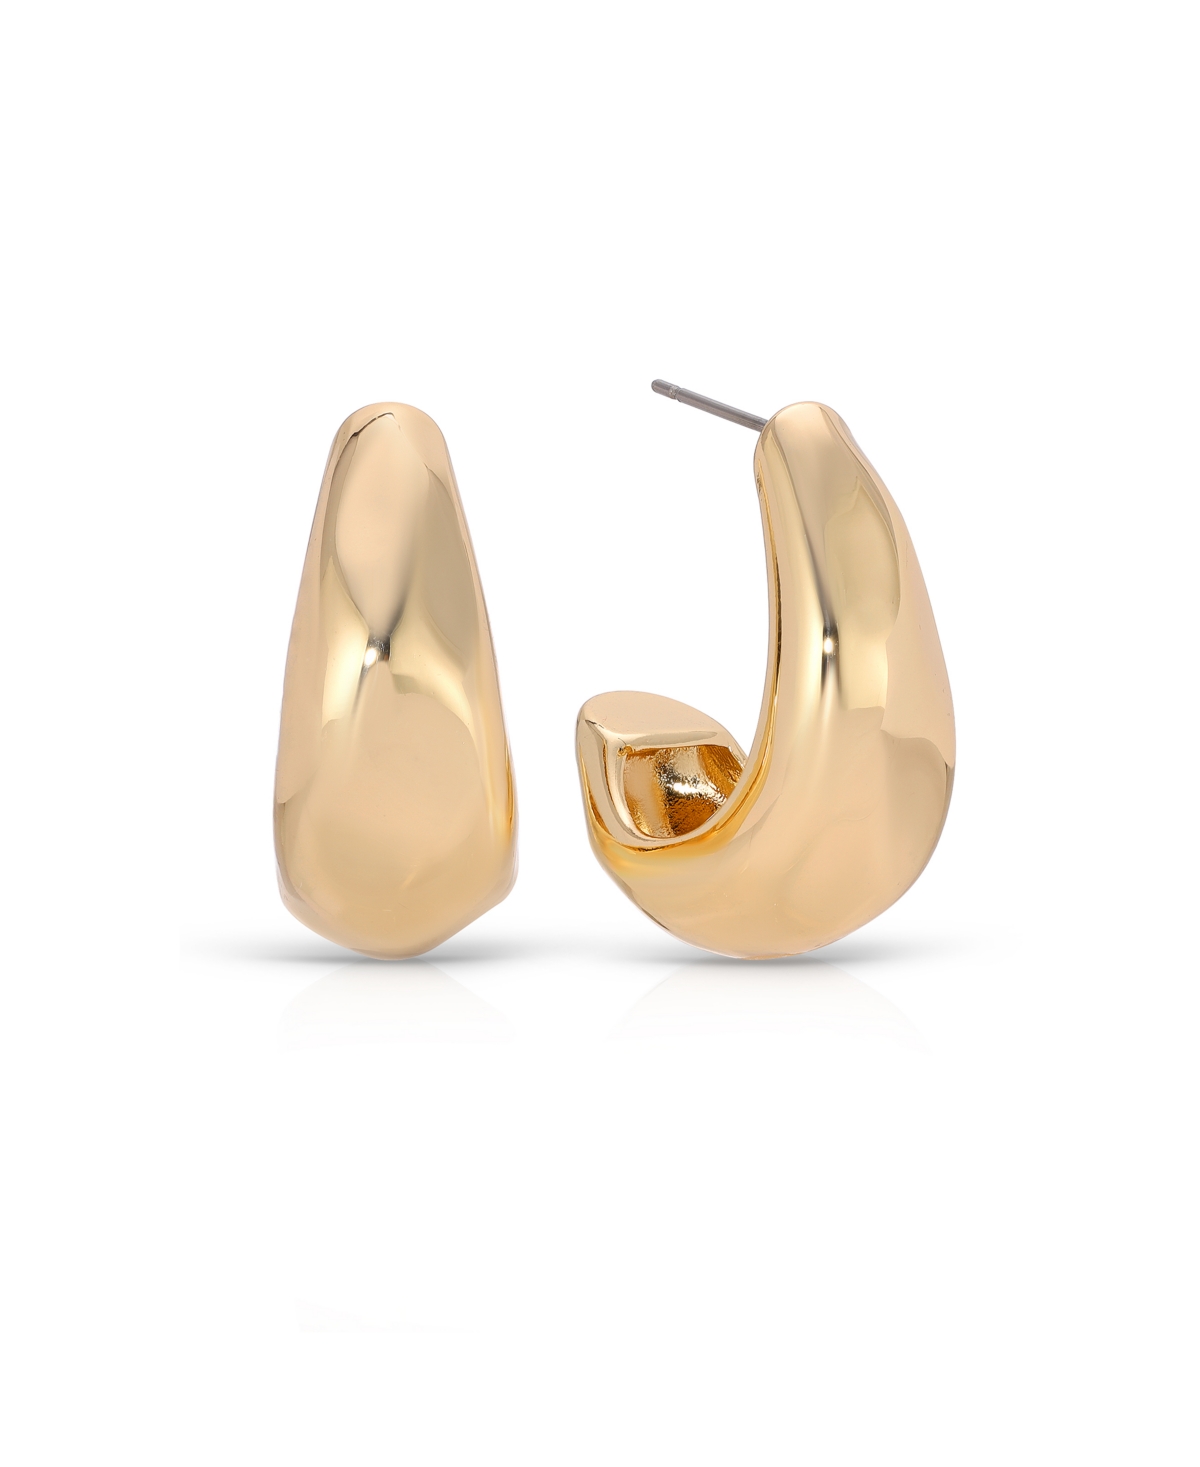 True Golden 18K Gold-Plated Hoop Earrings - Gold